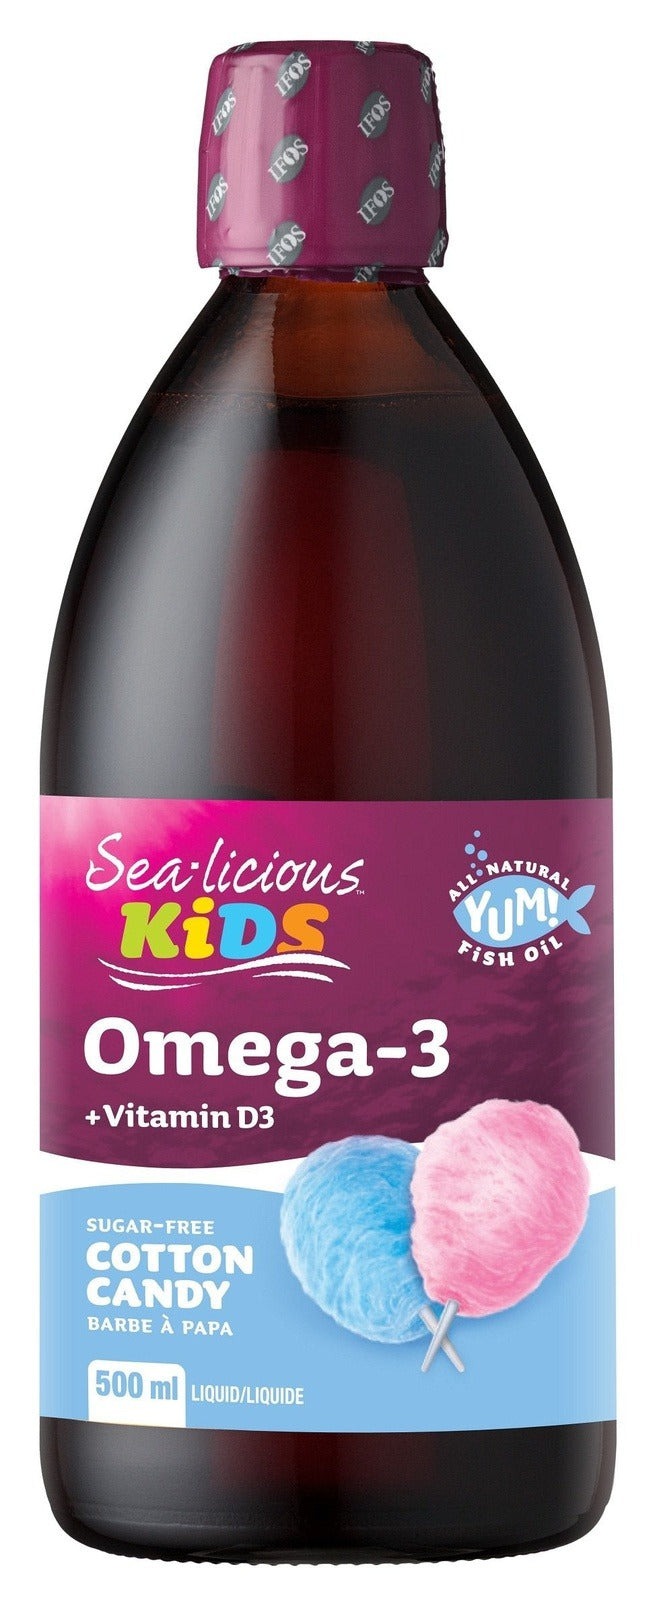 Karlene's Sea-licious Kids Omega-3 + Vitamin D - Cotton Candy Image 2